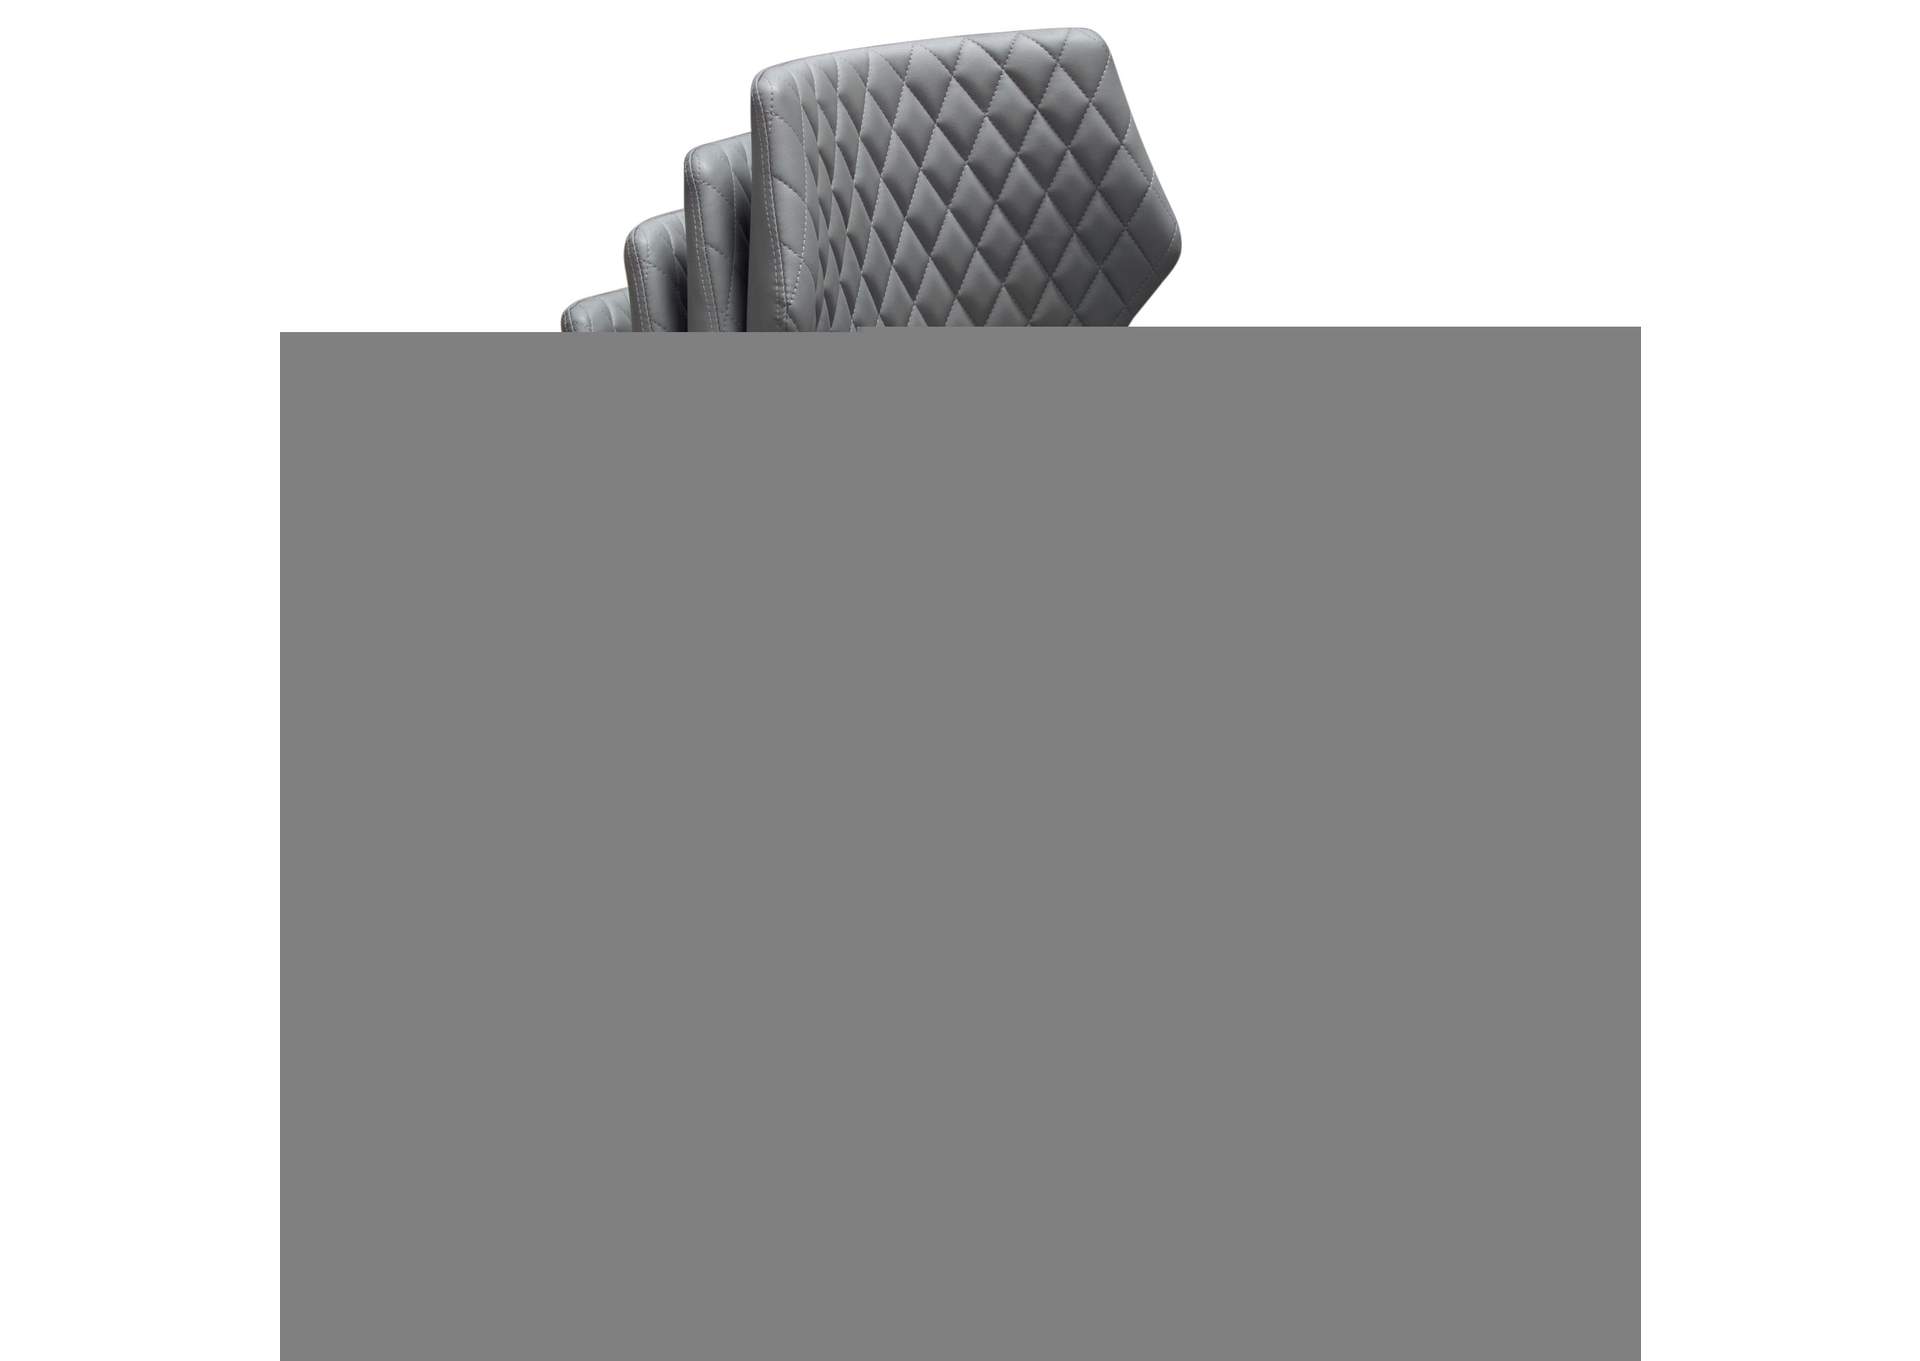 Milo 4-Pack Dining Chairs in Grey Diamond Tufted Leatherette with Black Powder Coat Legs by Diamond Sofa,Diamond Sofa